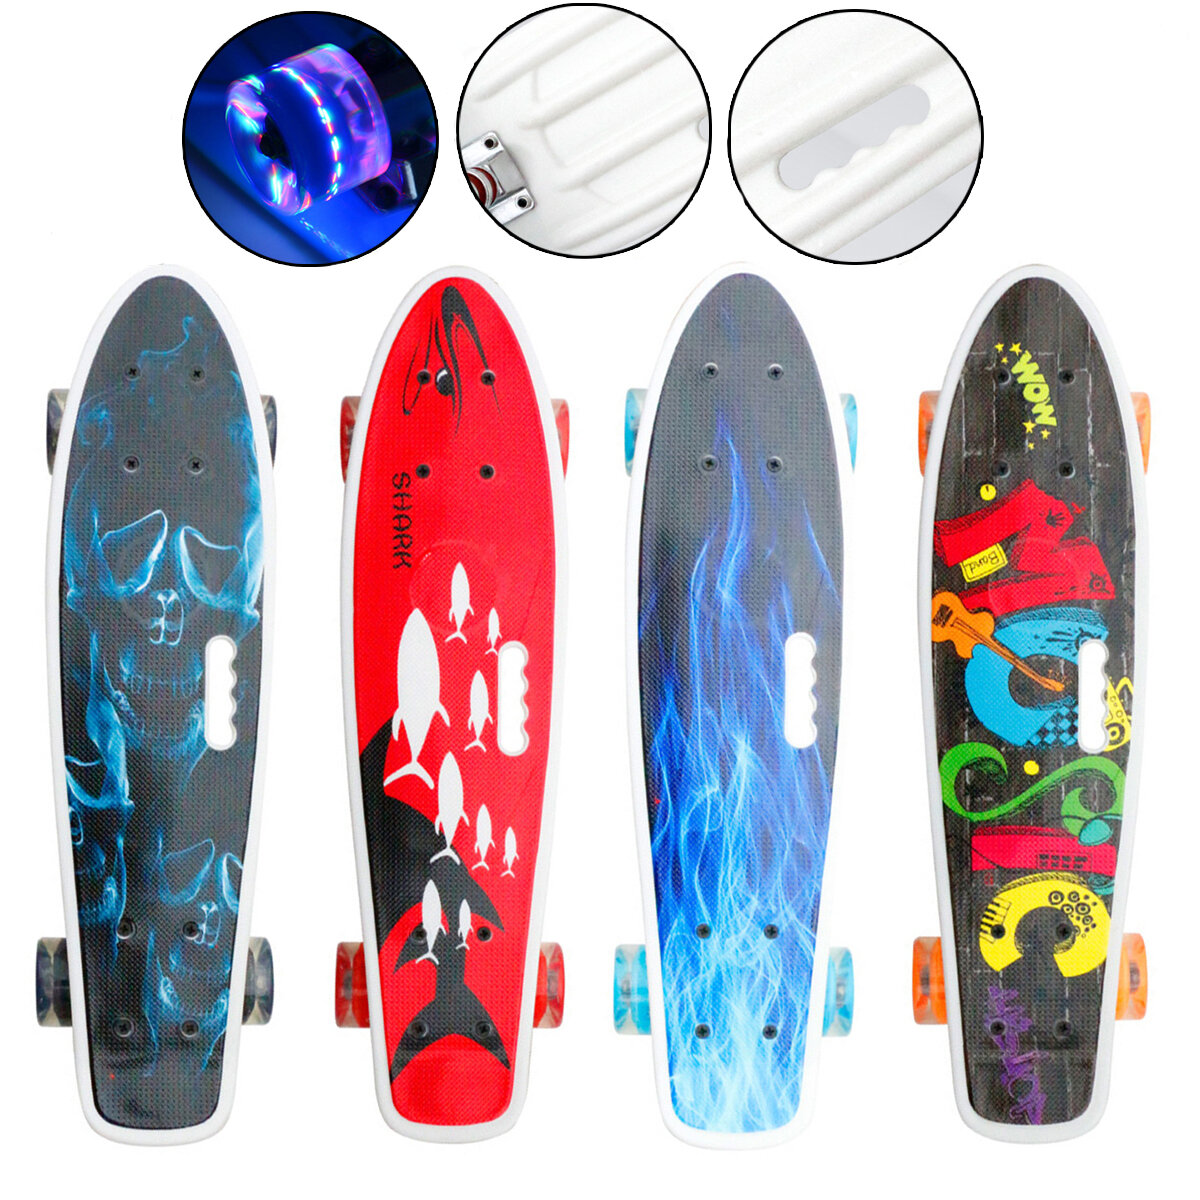 22Inch Unisex Portable Flashing Wheel Skateboards Beginner Long Board for Kids Men Women Easy to Control Skate Board